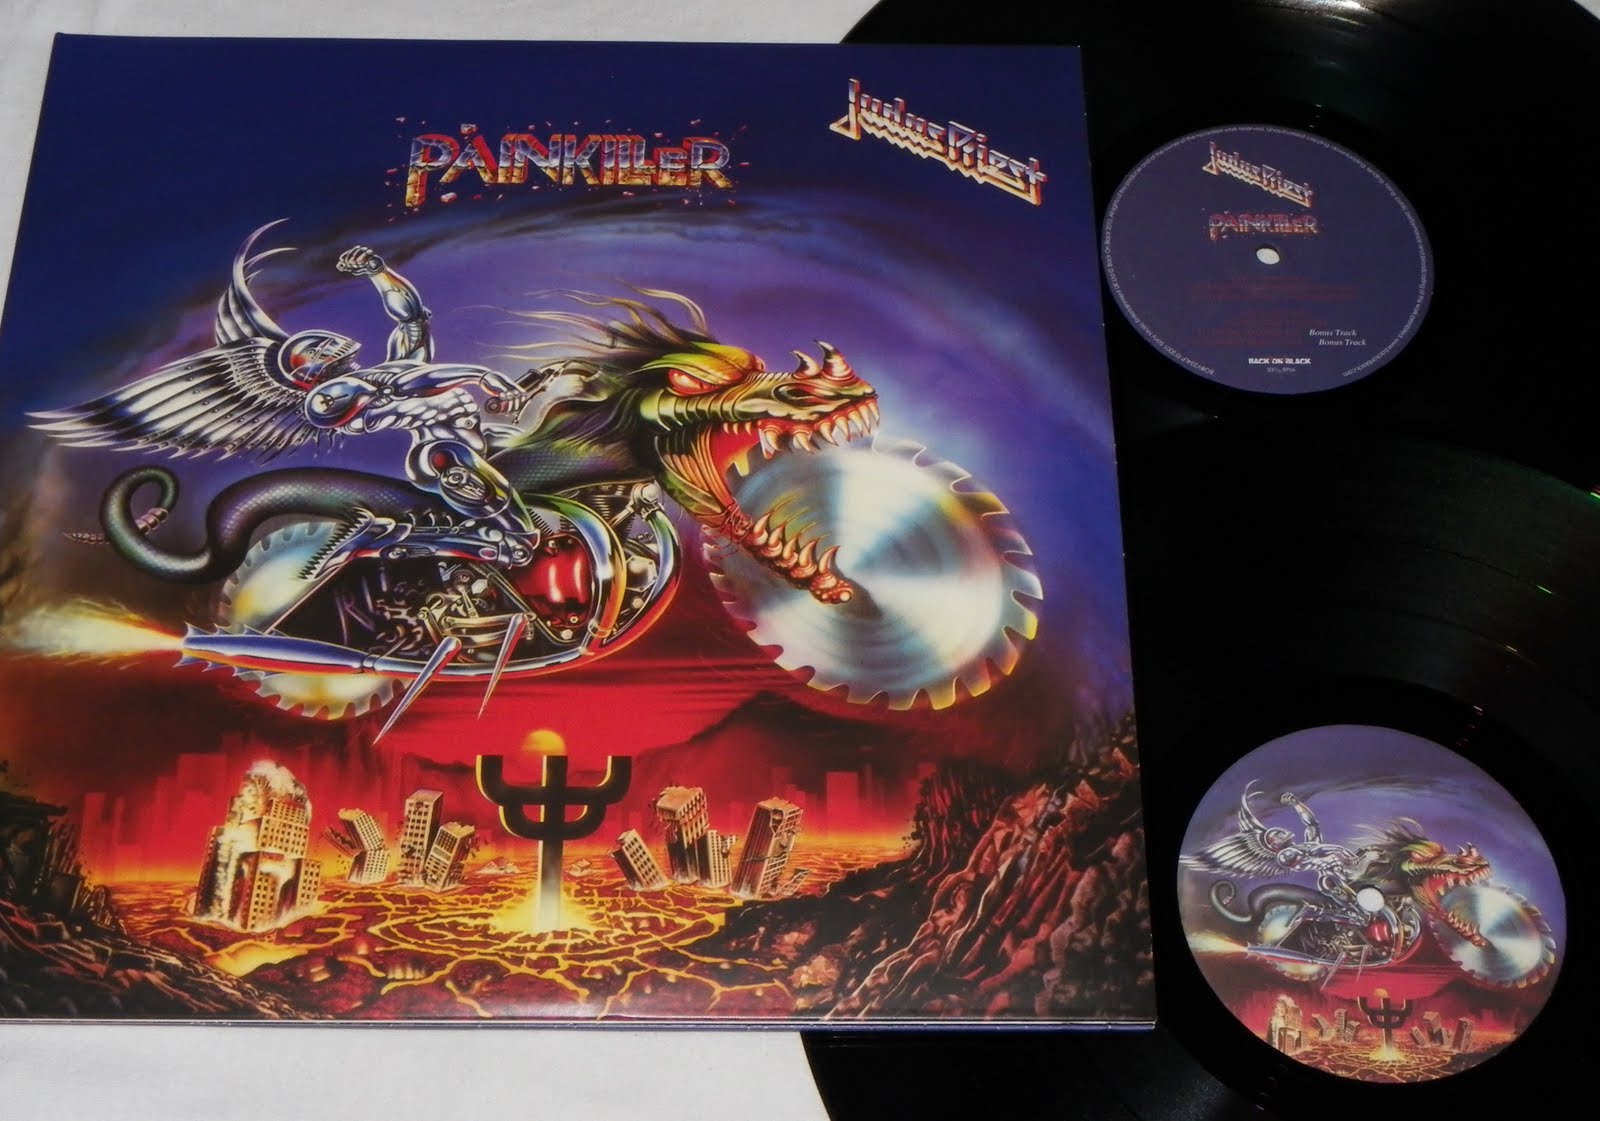 Judas priest invincible shield mp3. Judas Priest Painkiller 1990. Judas Priest Painkiller обложка. Judas Priest Painkiller 1990 Tour. Judas Priest 1990 Painkiller обложка альбома.